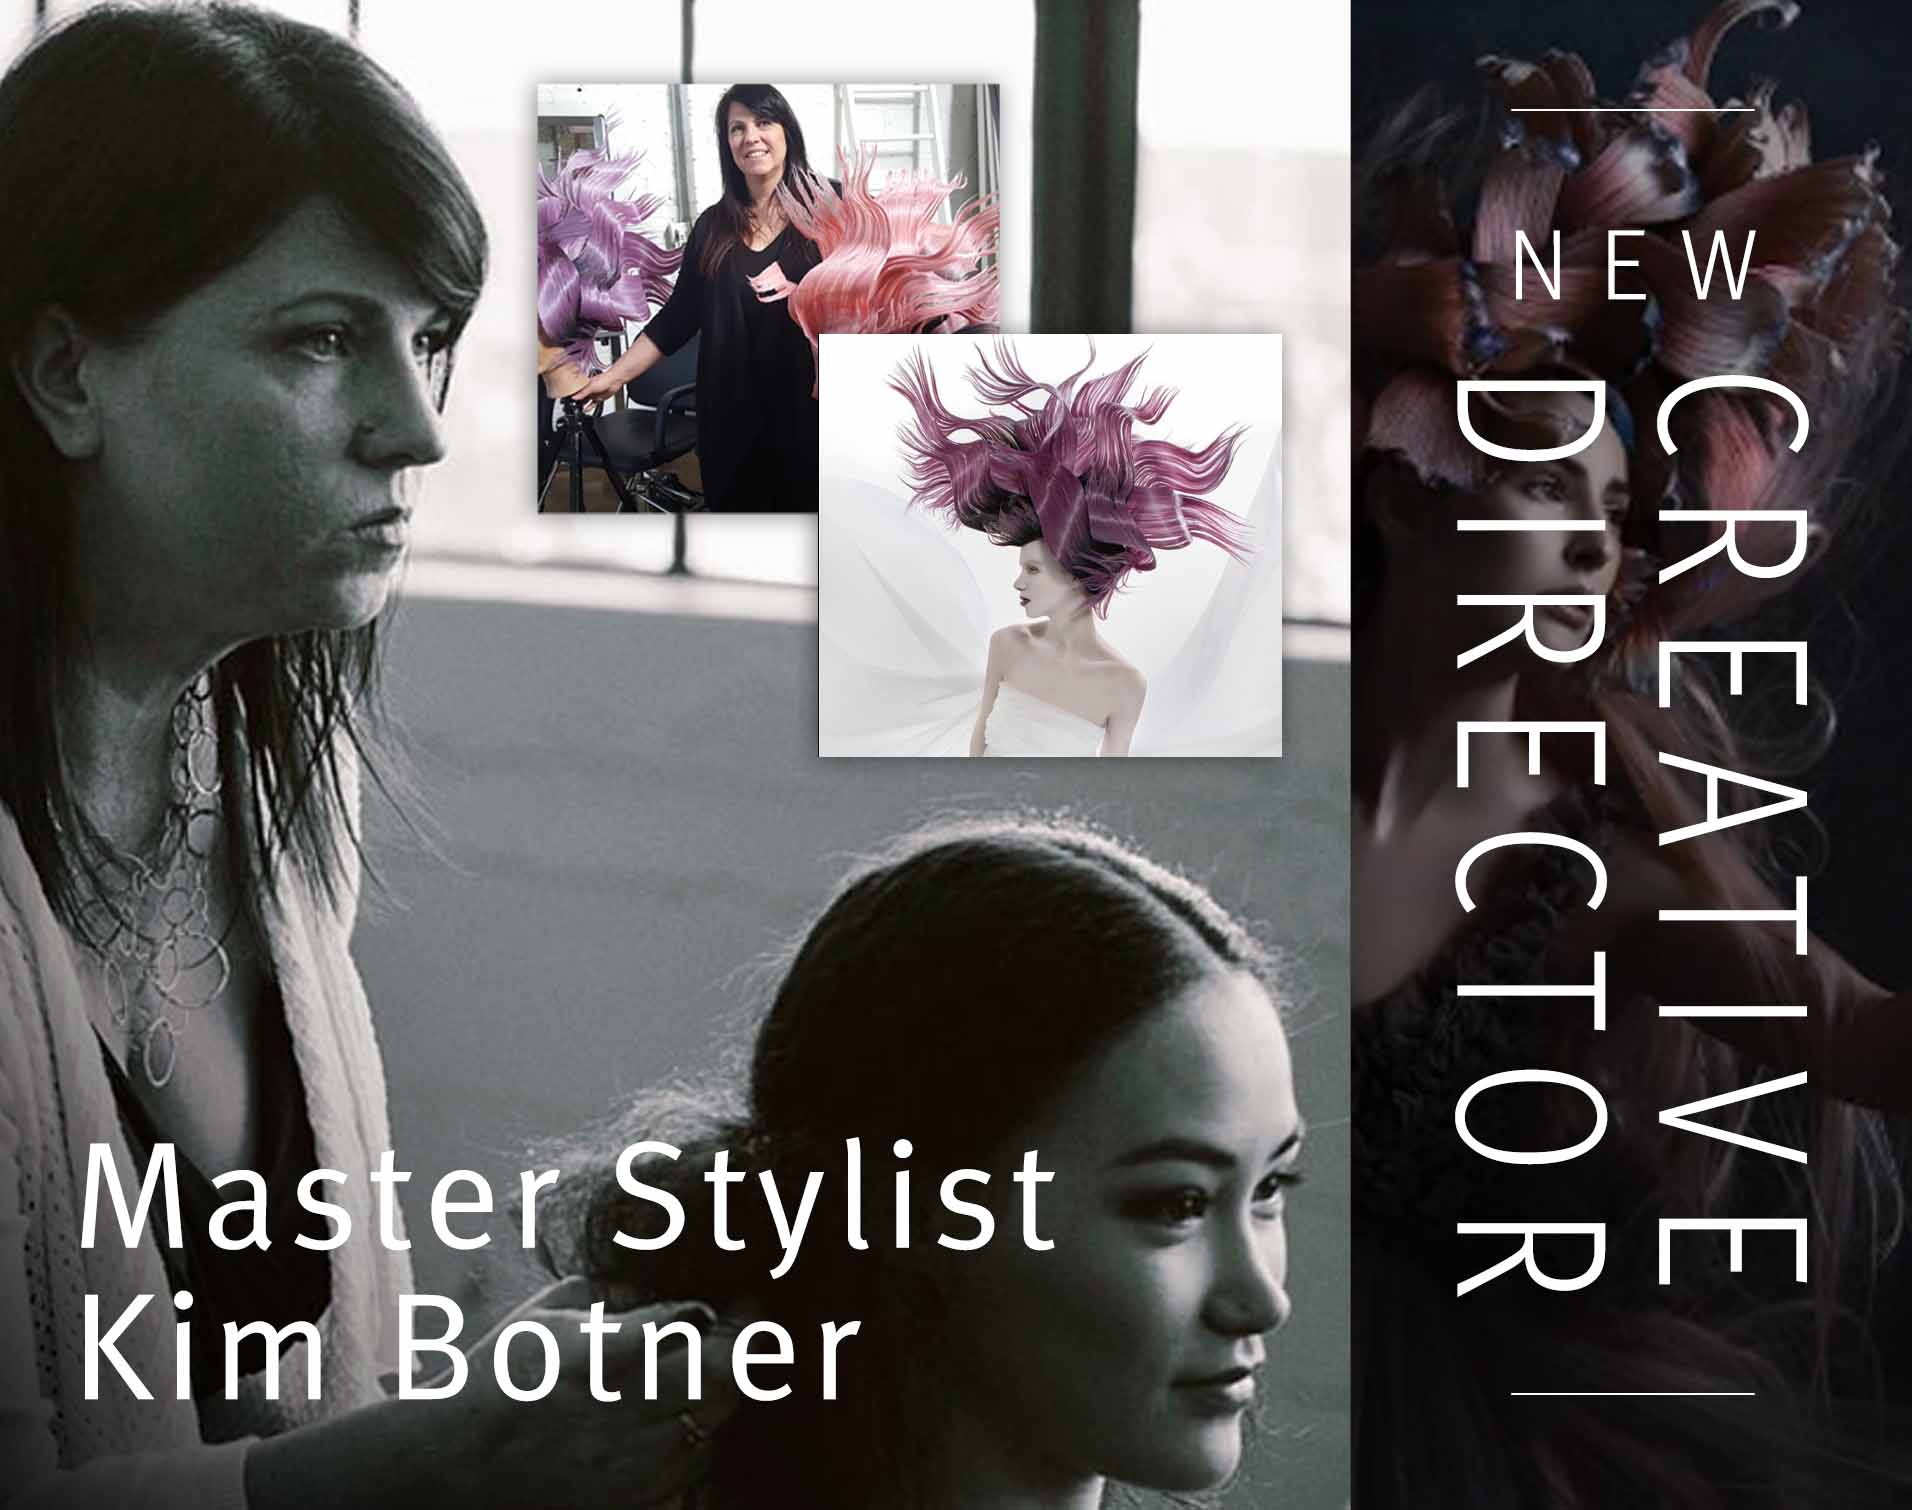 Our new Creative director Master Stylist Kim Botner